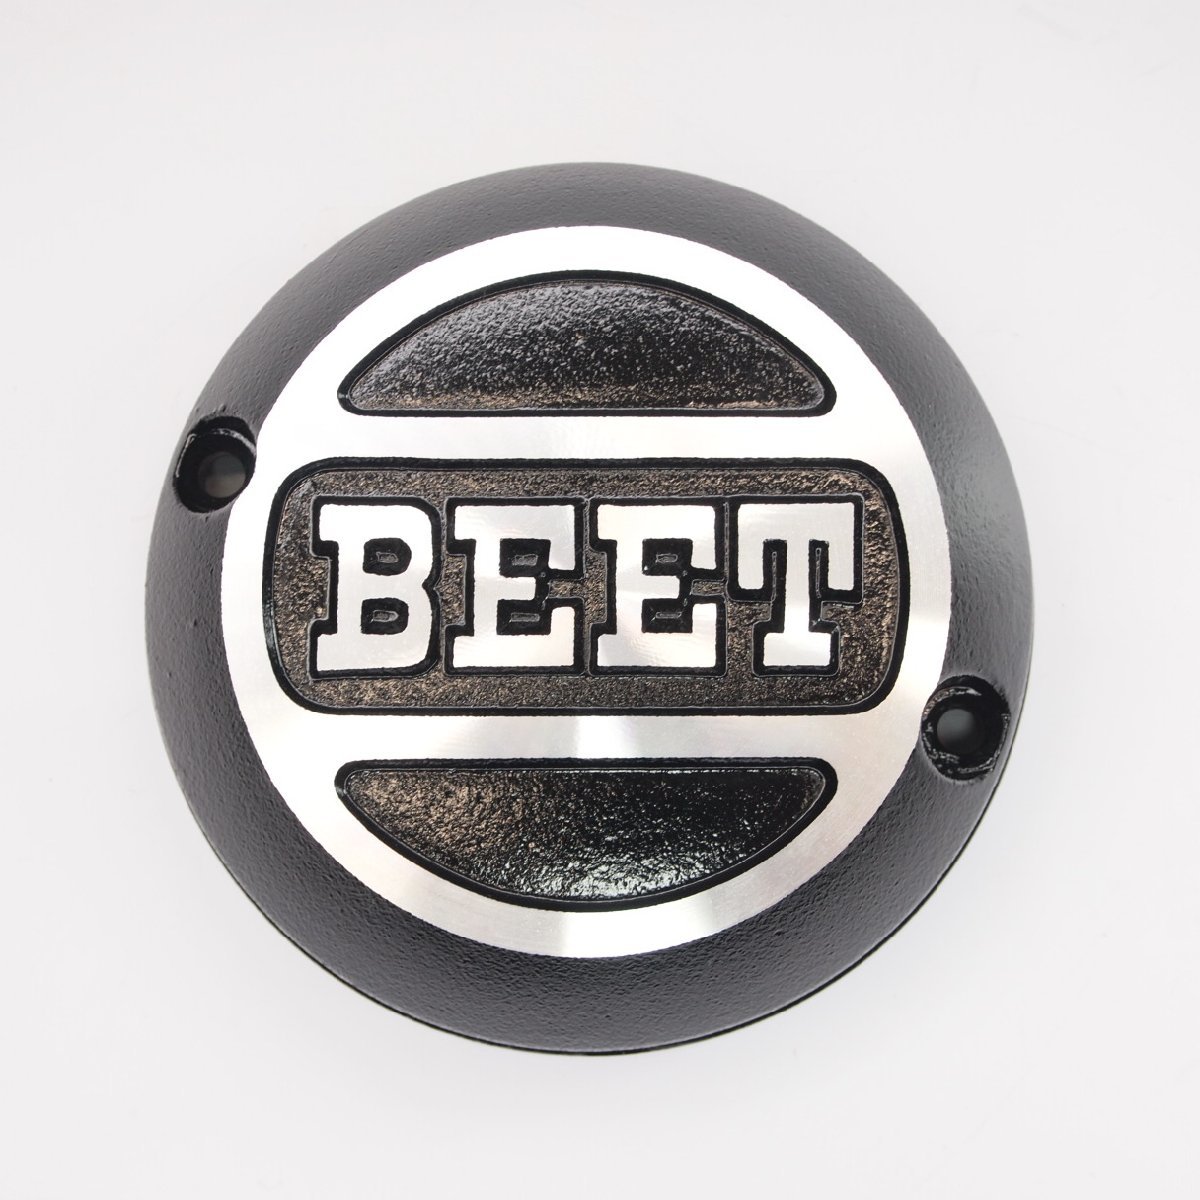 BEET ポイントカバー CB400F 398 408 限定販売品 CB400Four ビートの画像1